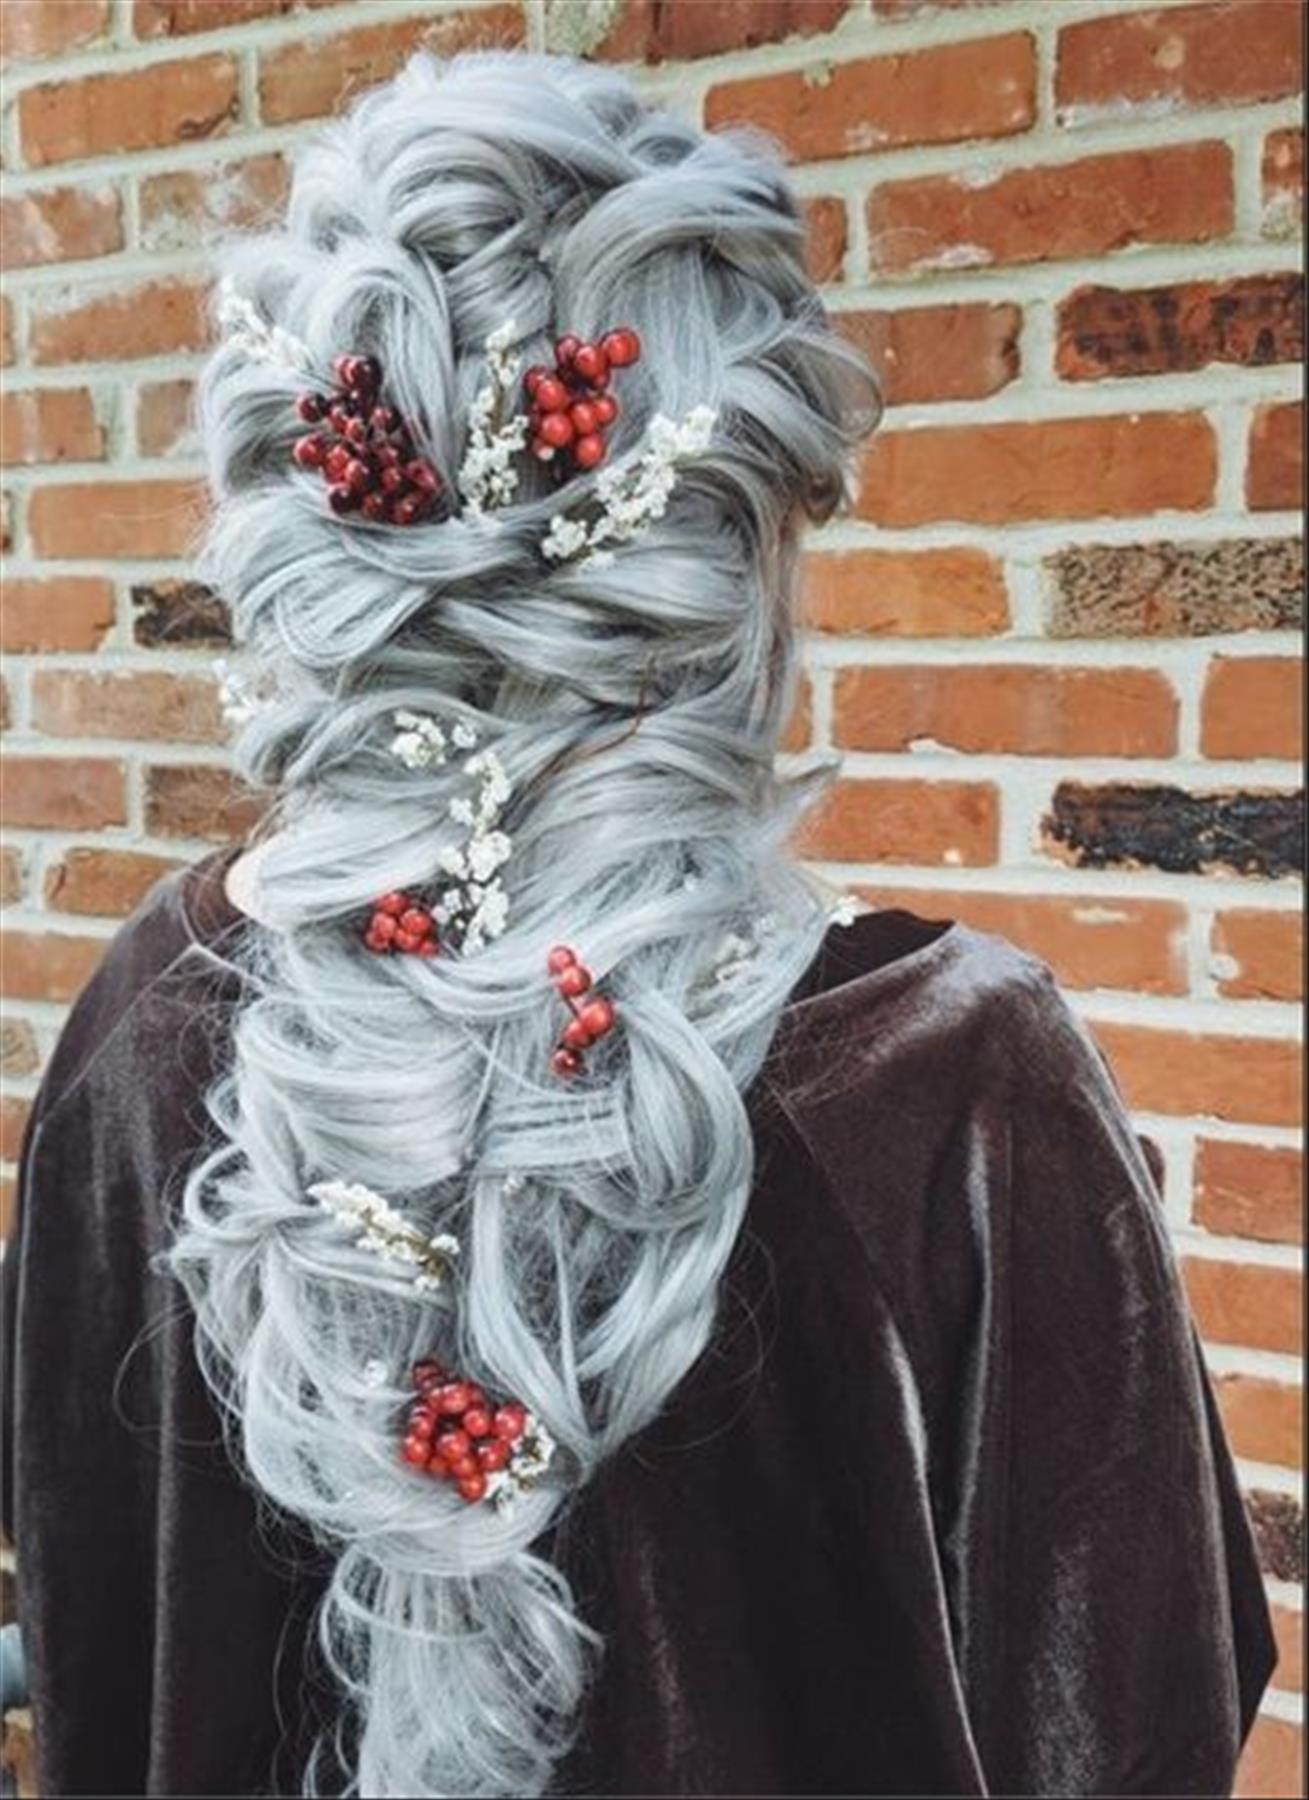 Brilliant Christmas Hair Color Ideas for Winter